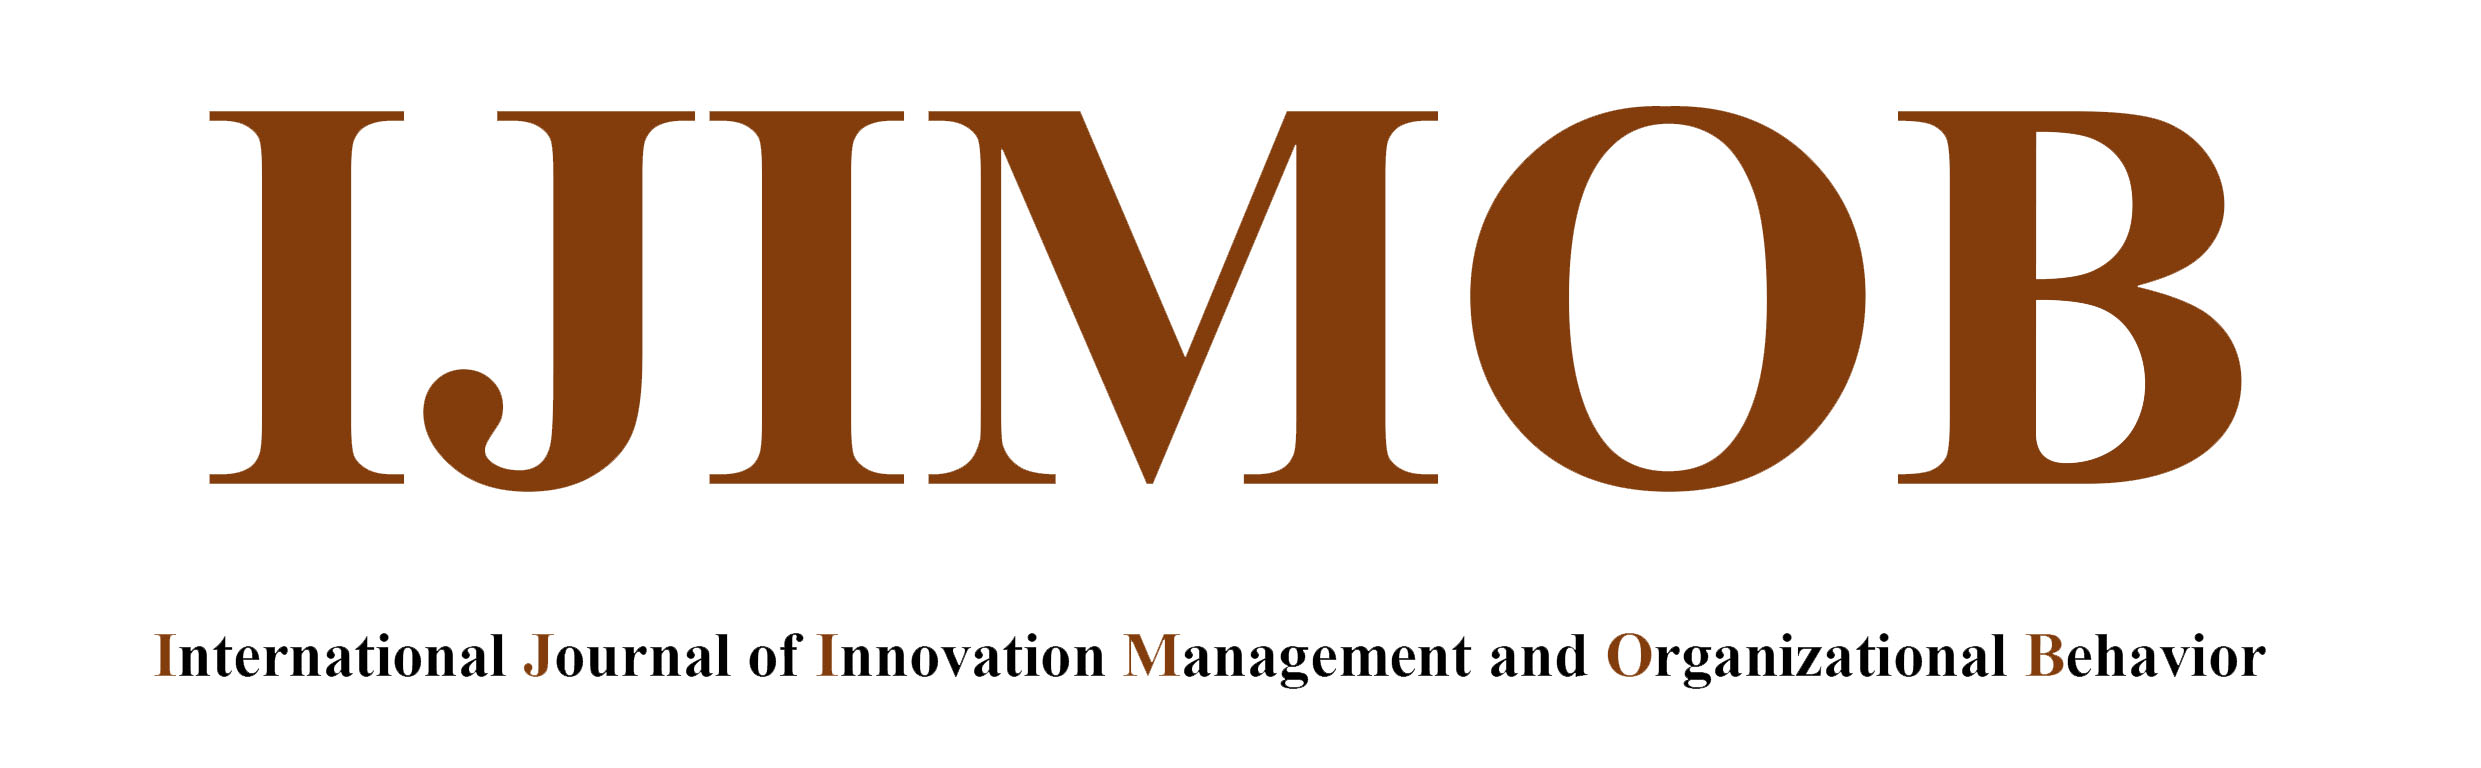 International Journal of Innovation Management and Organizational Behavior 